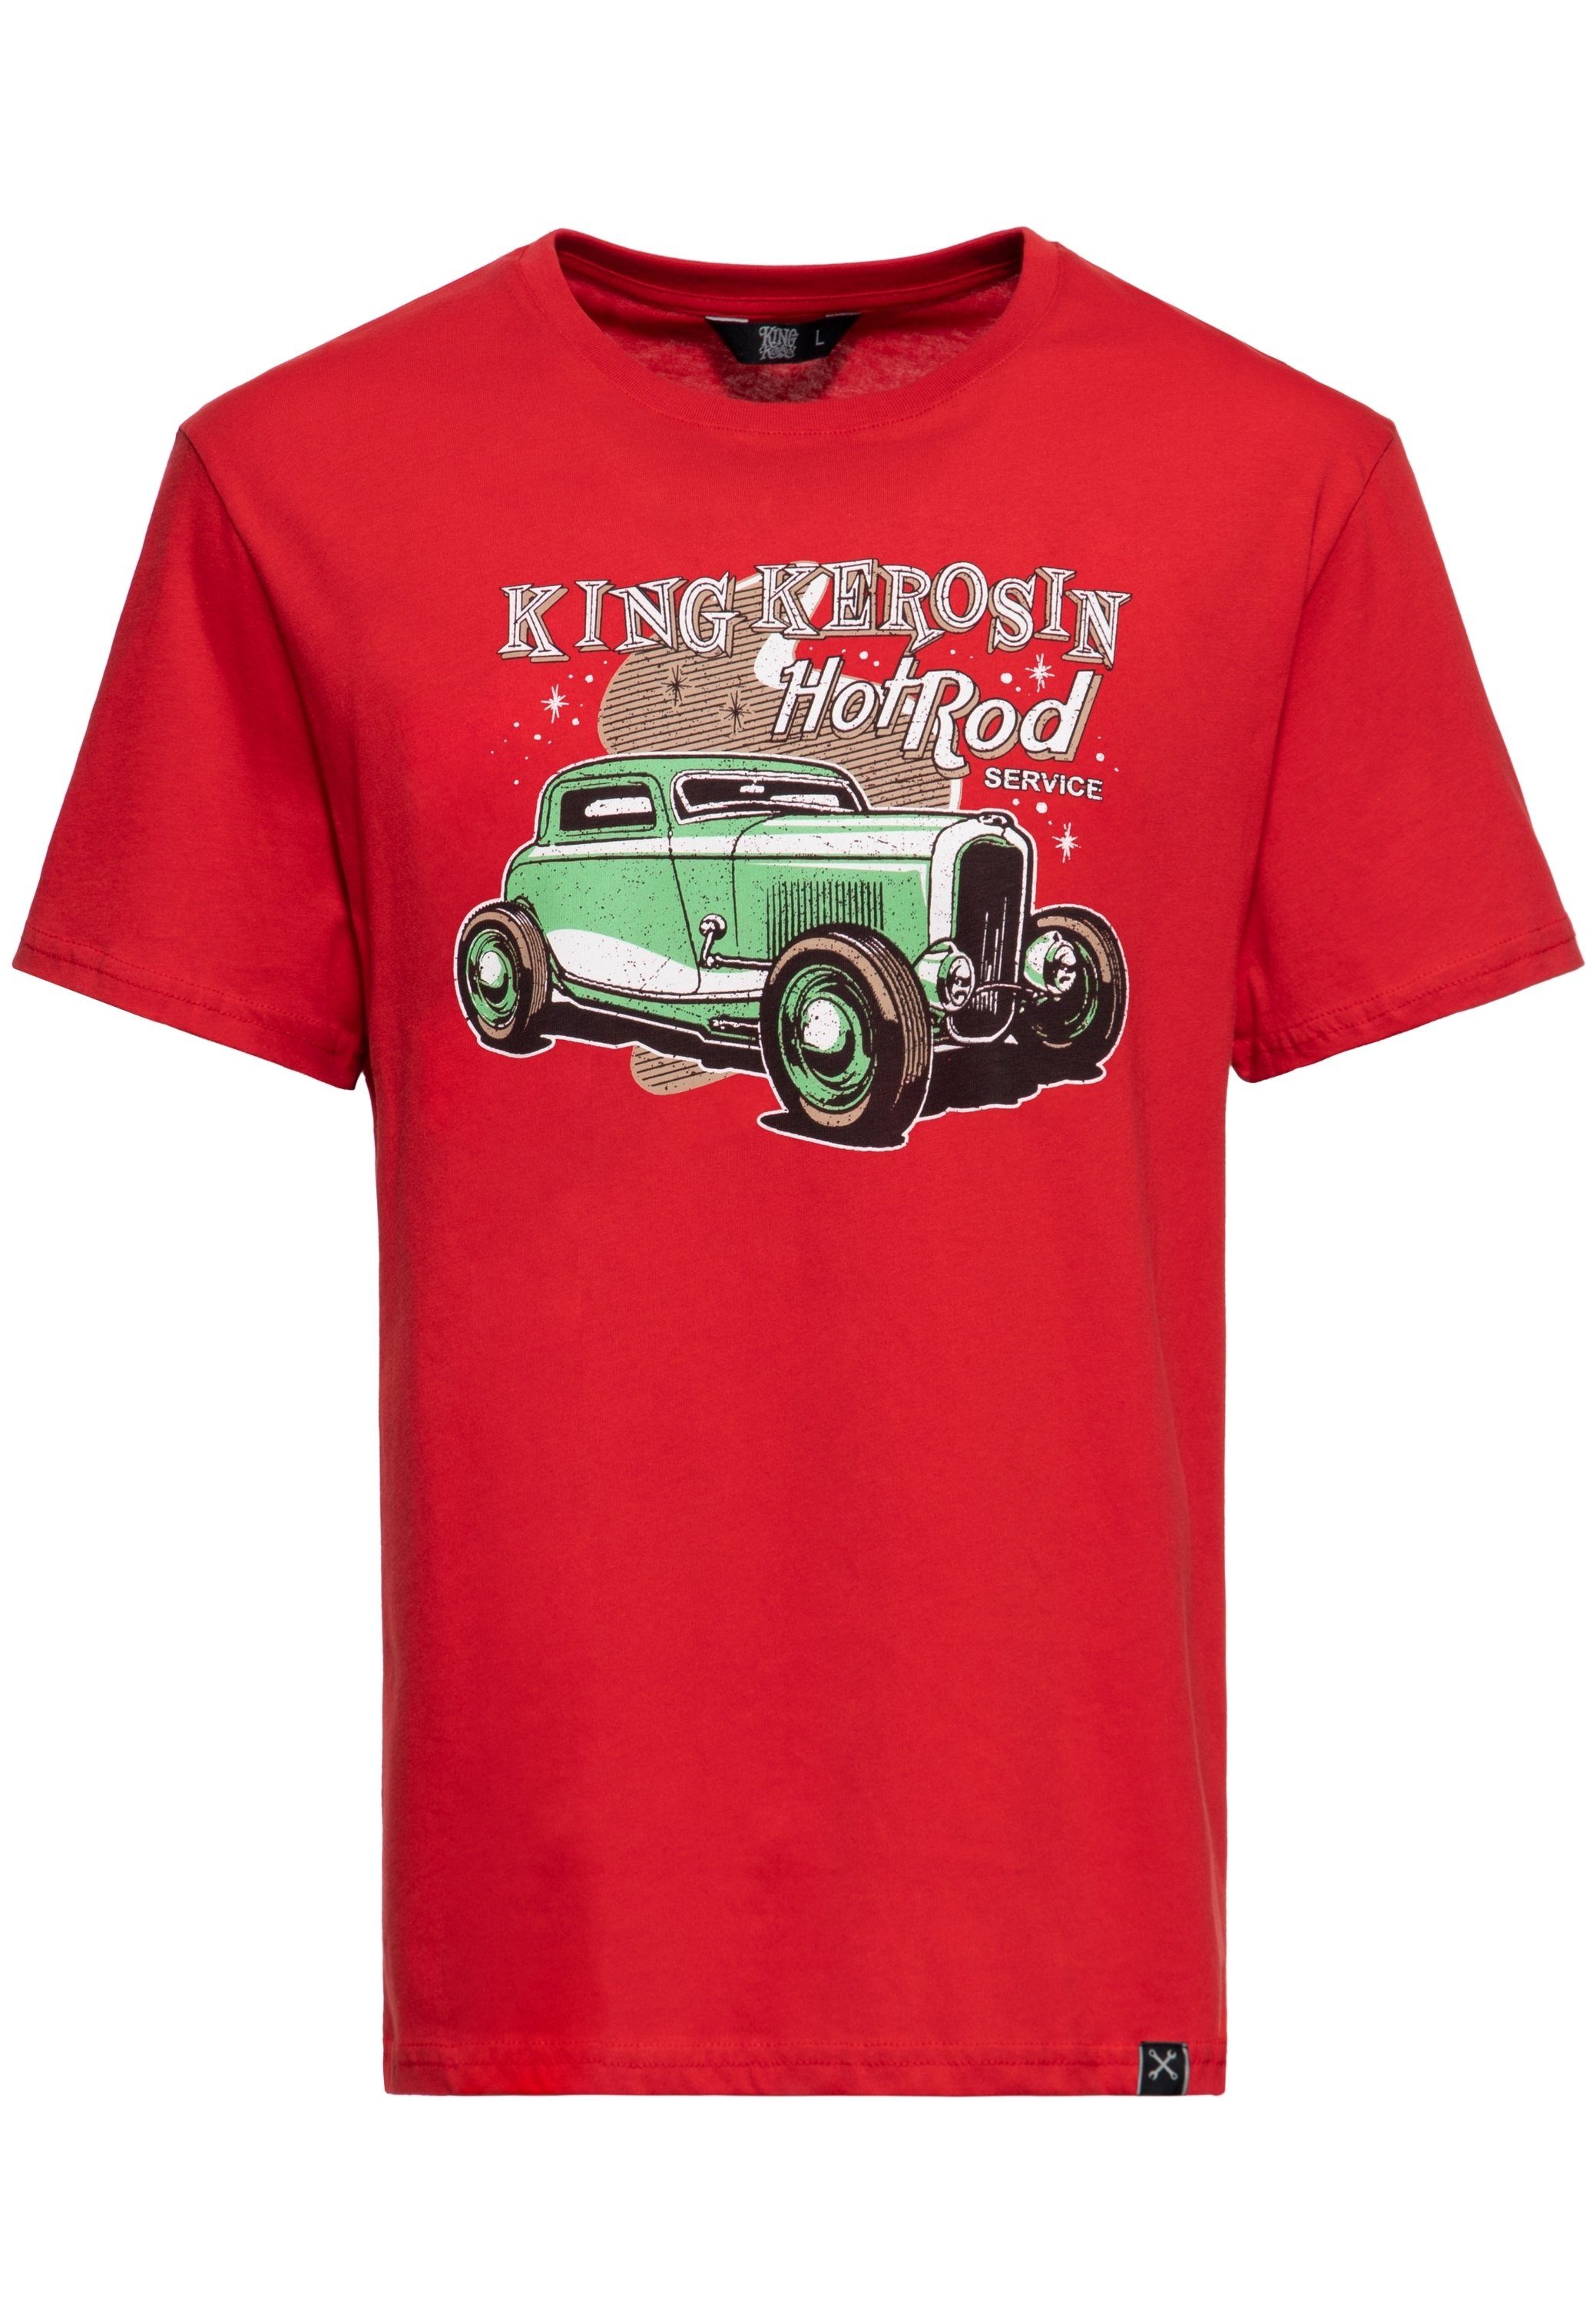 KingKerosin Print-Shirt Hotrod Service mit Retro-Artwork Print rot